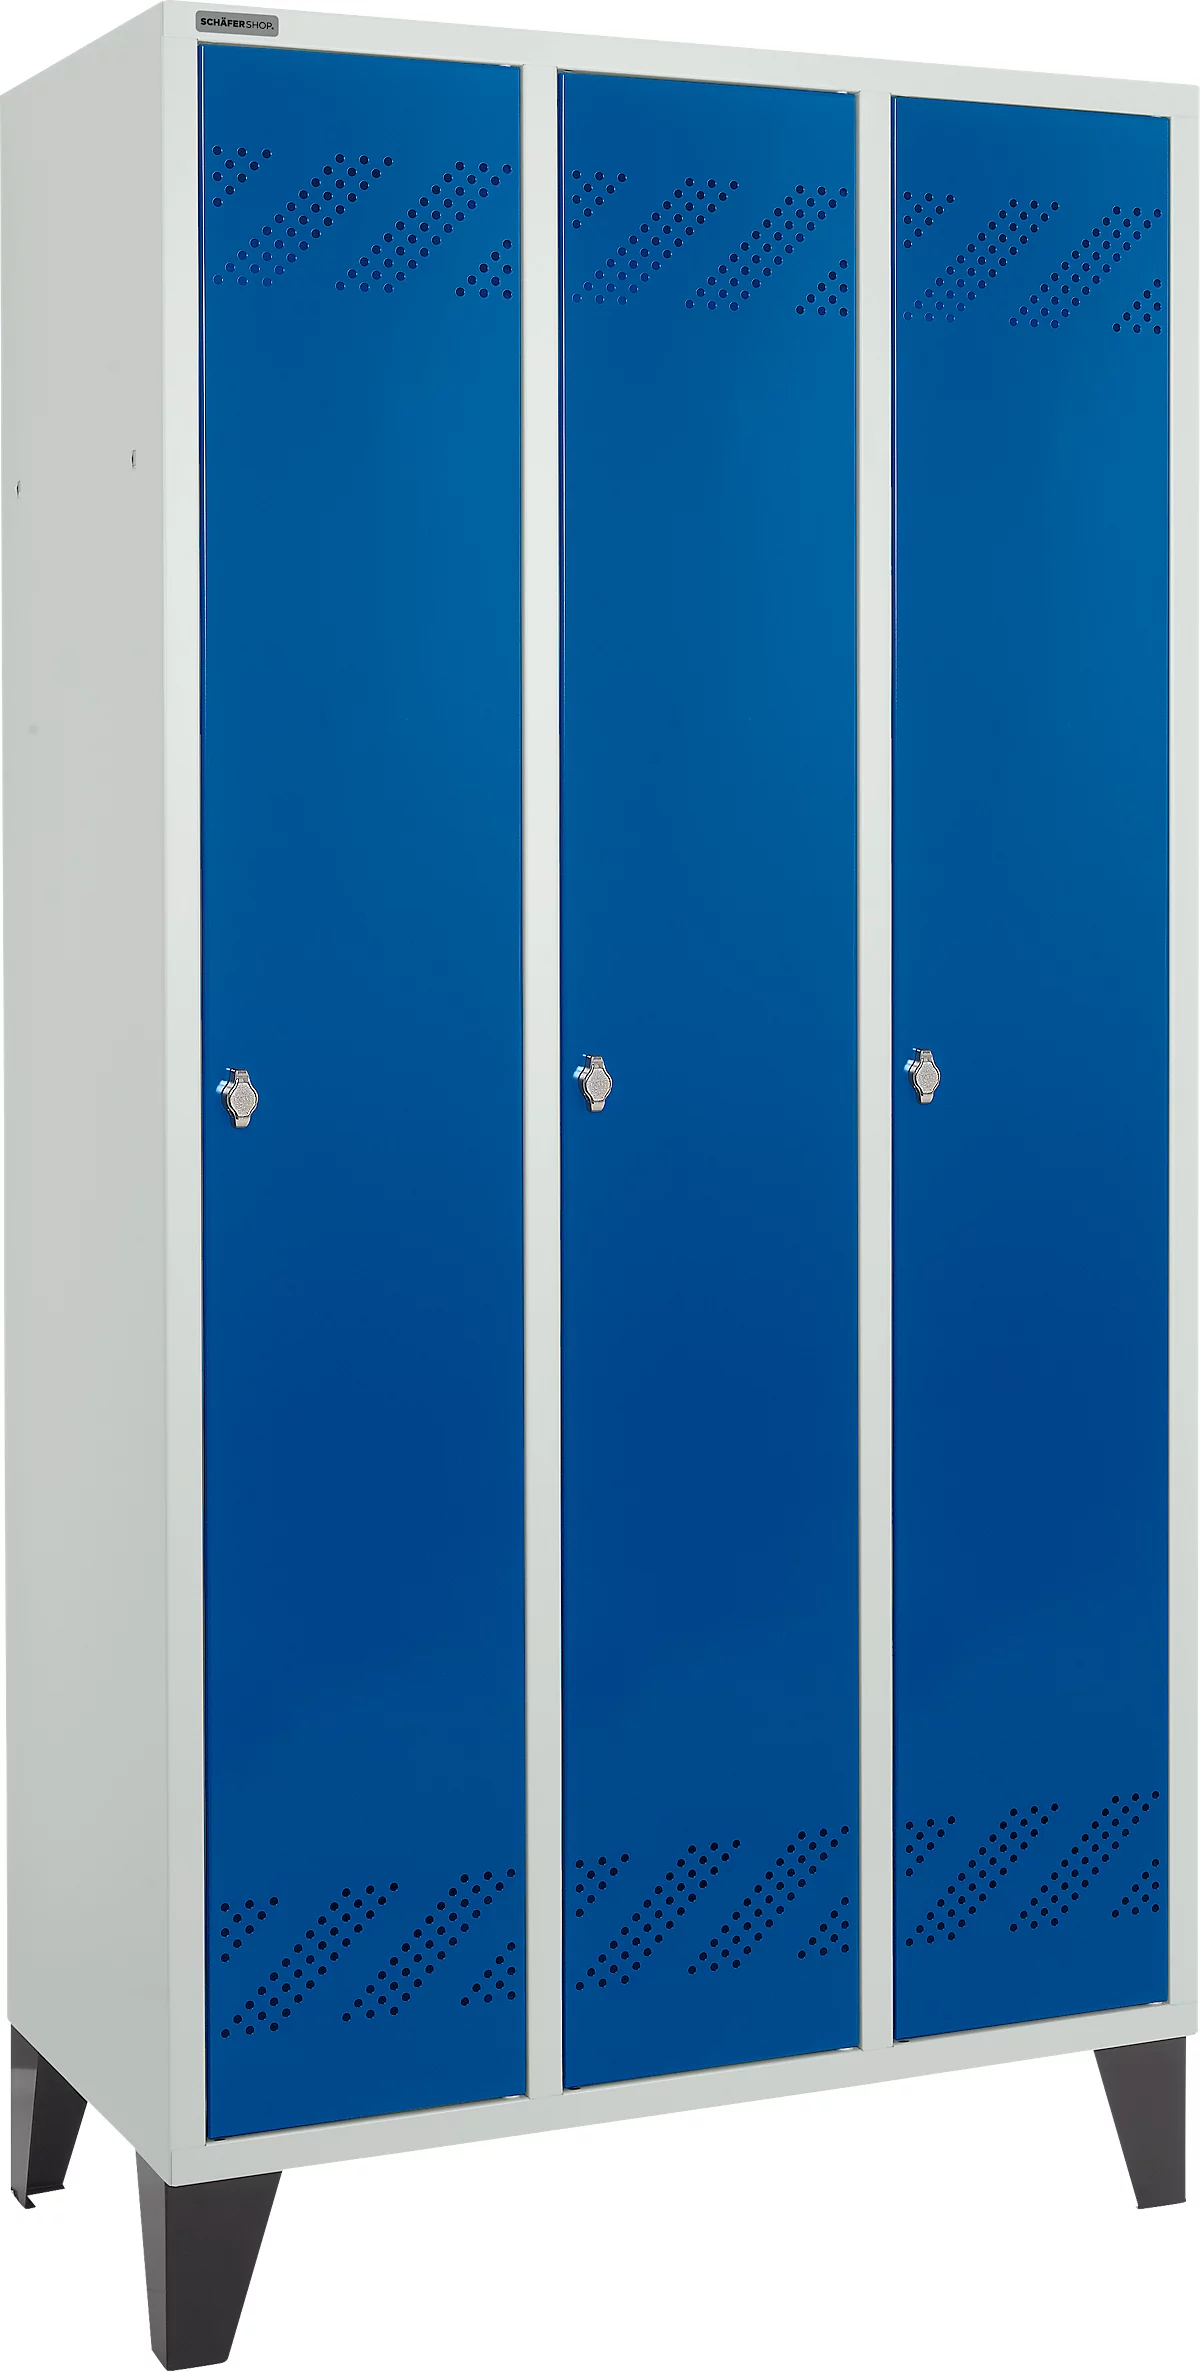 Schäfer Shop Pure Taquilla, 3 compartimentos, cierre de pasador giratorio, gris luminoso/azul genciana